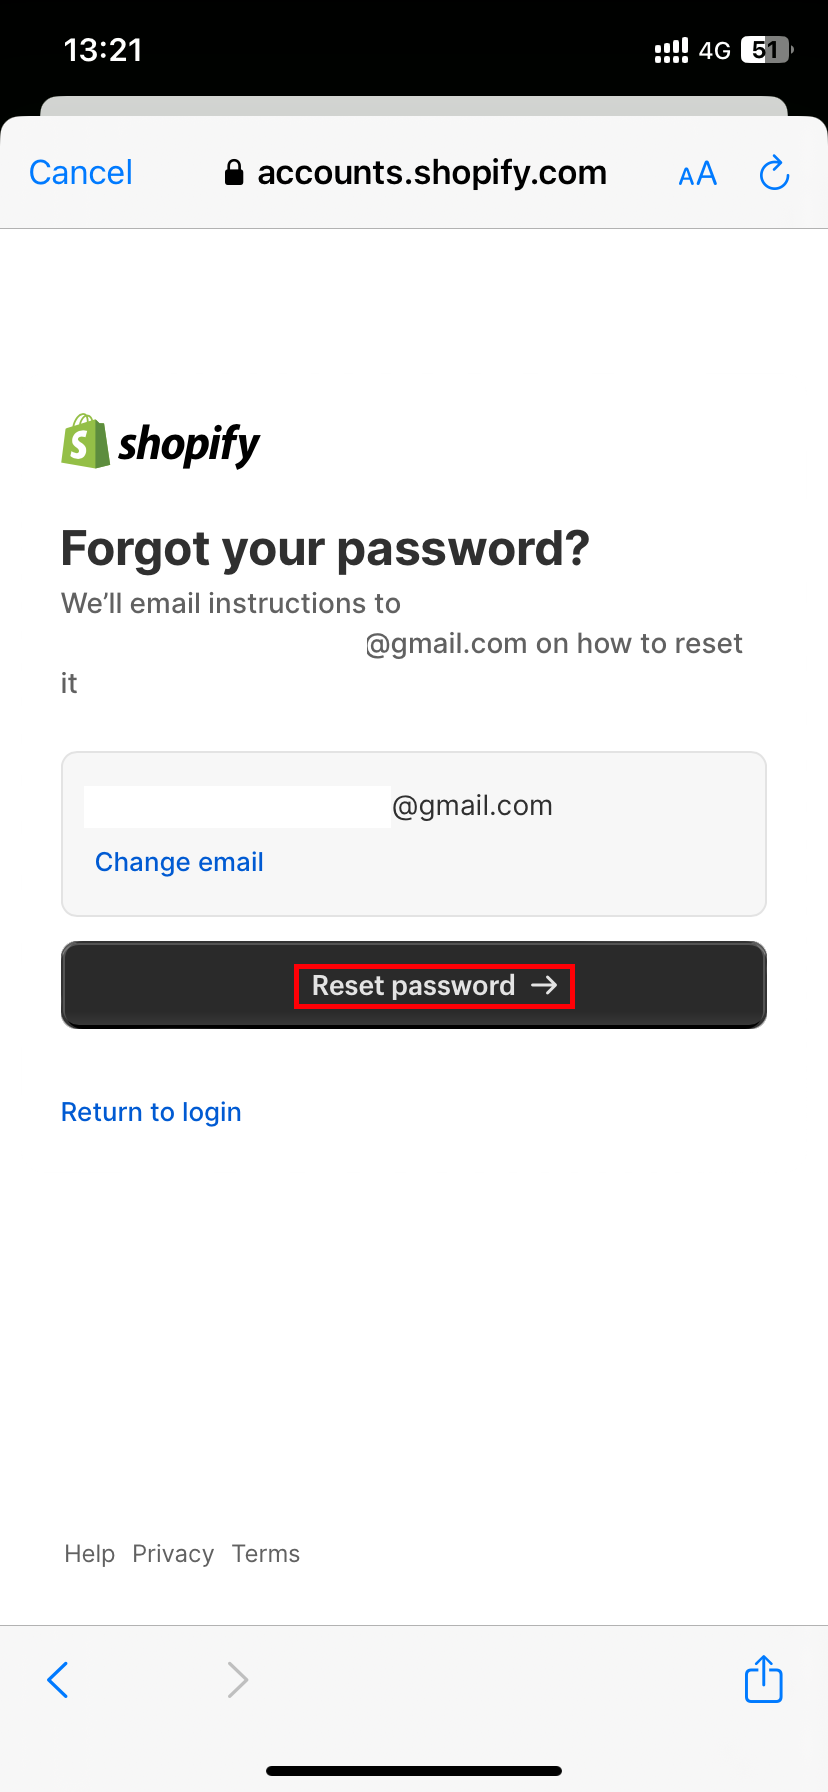 click “Reset password”